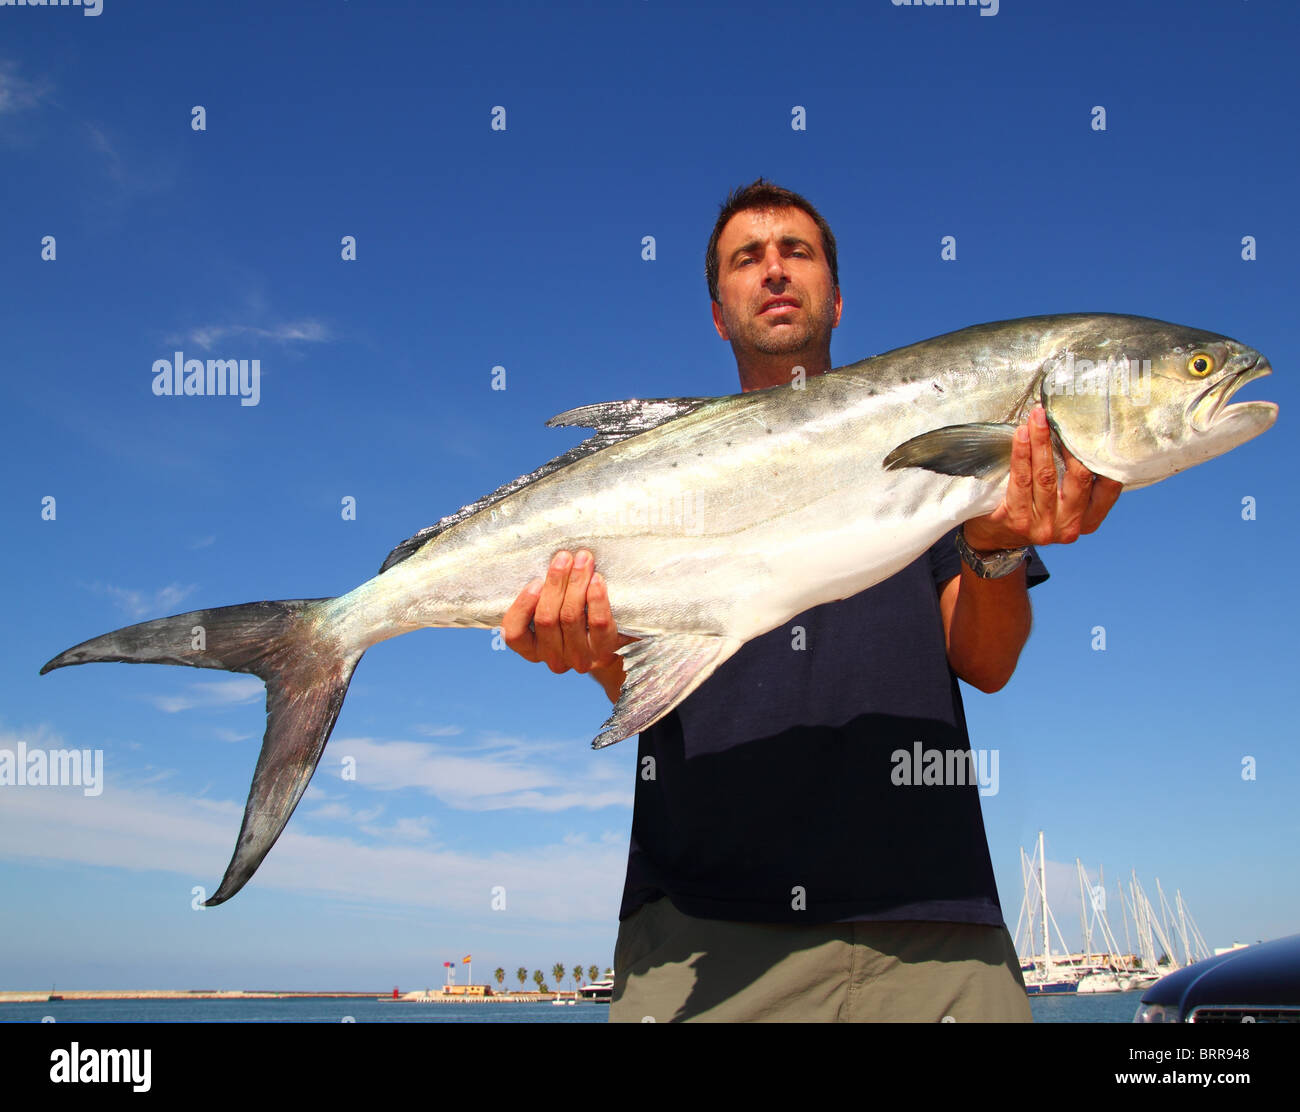 Fisherman holding catch Garrick Lichia Amia Leerfish Leervis fishJack Stock Photo